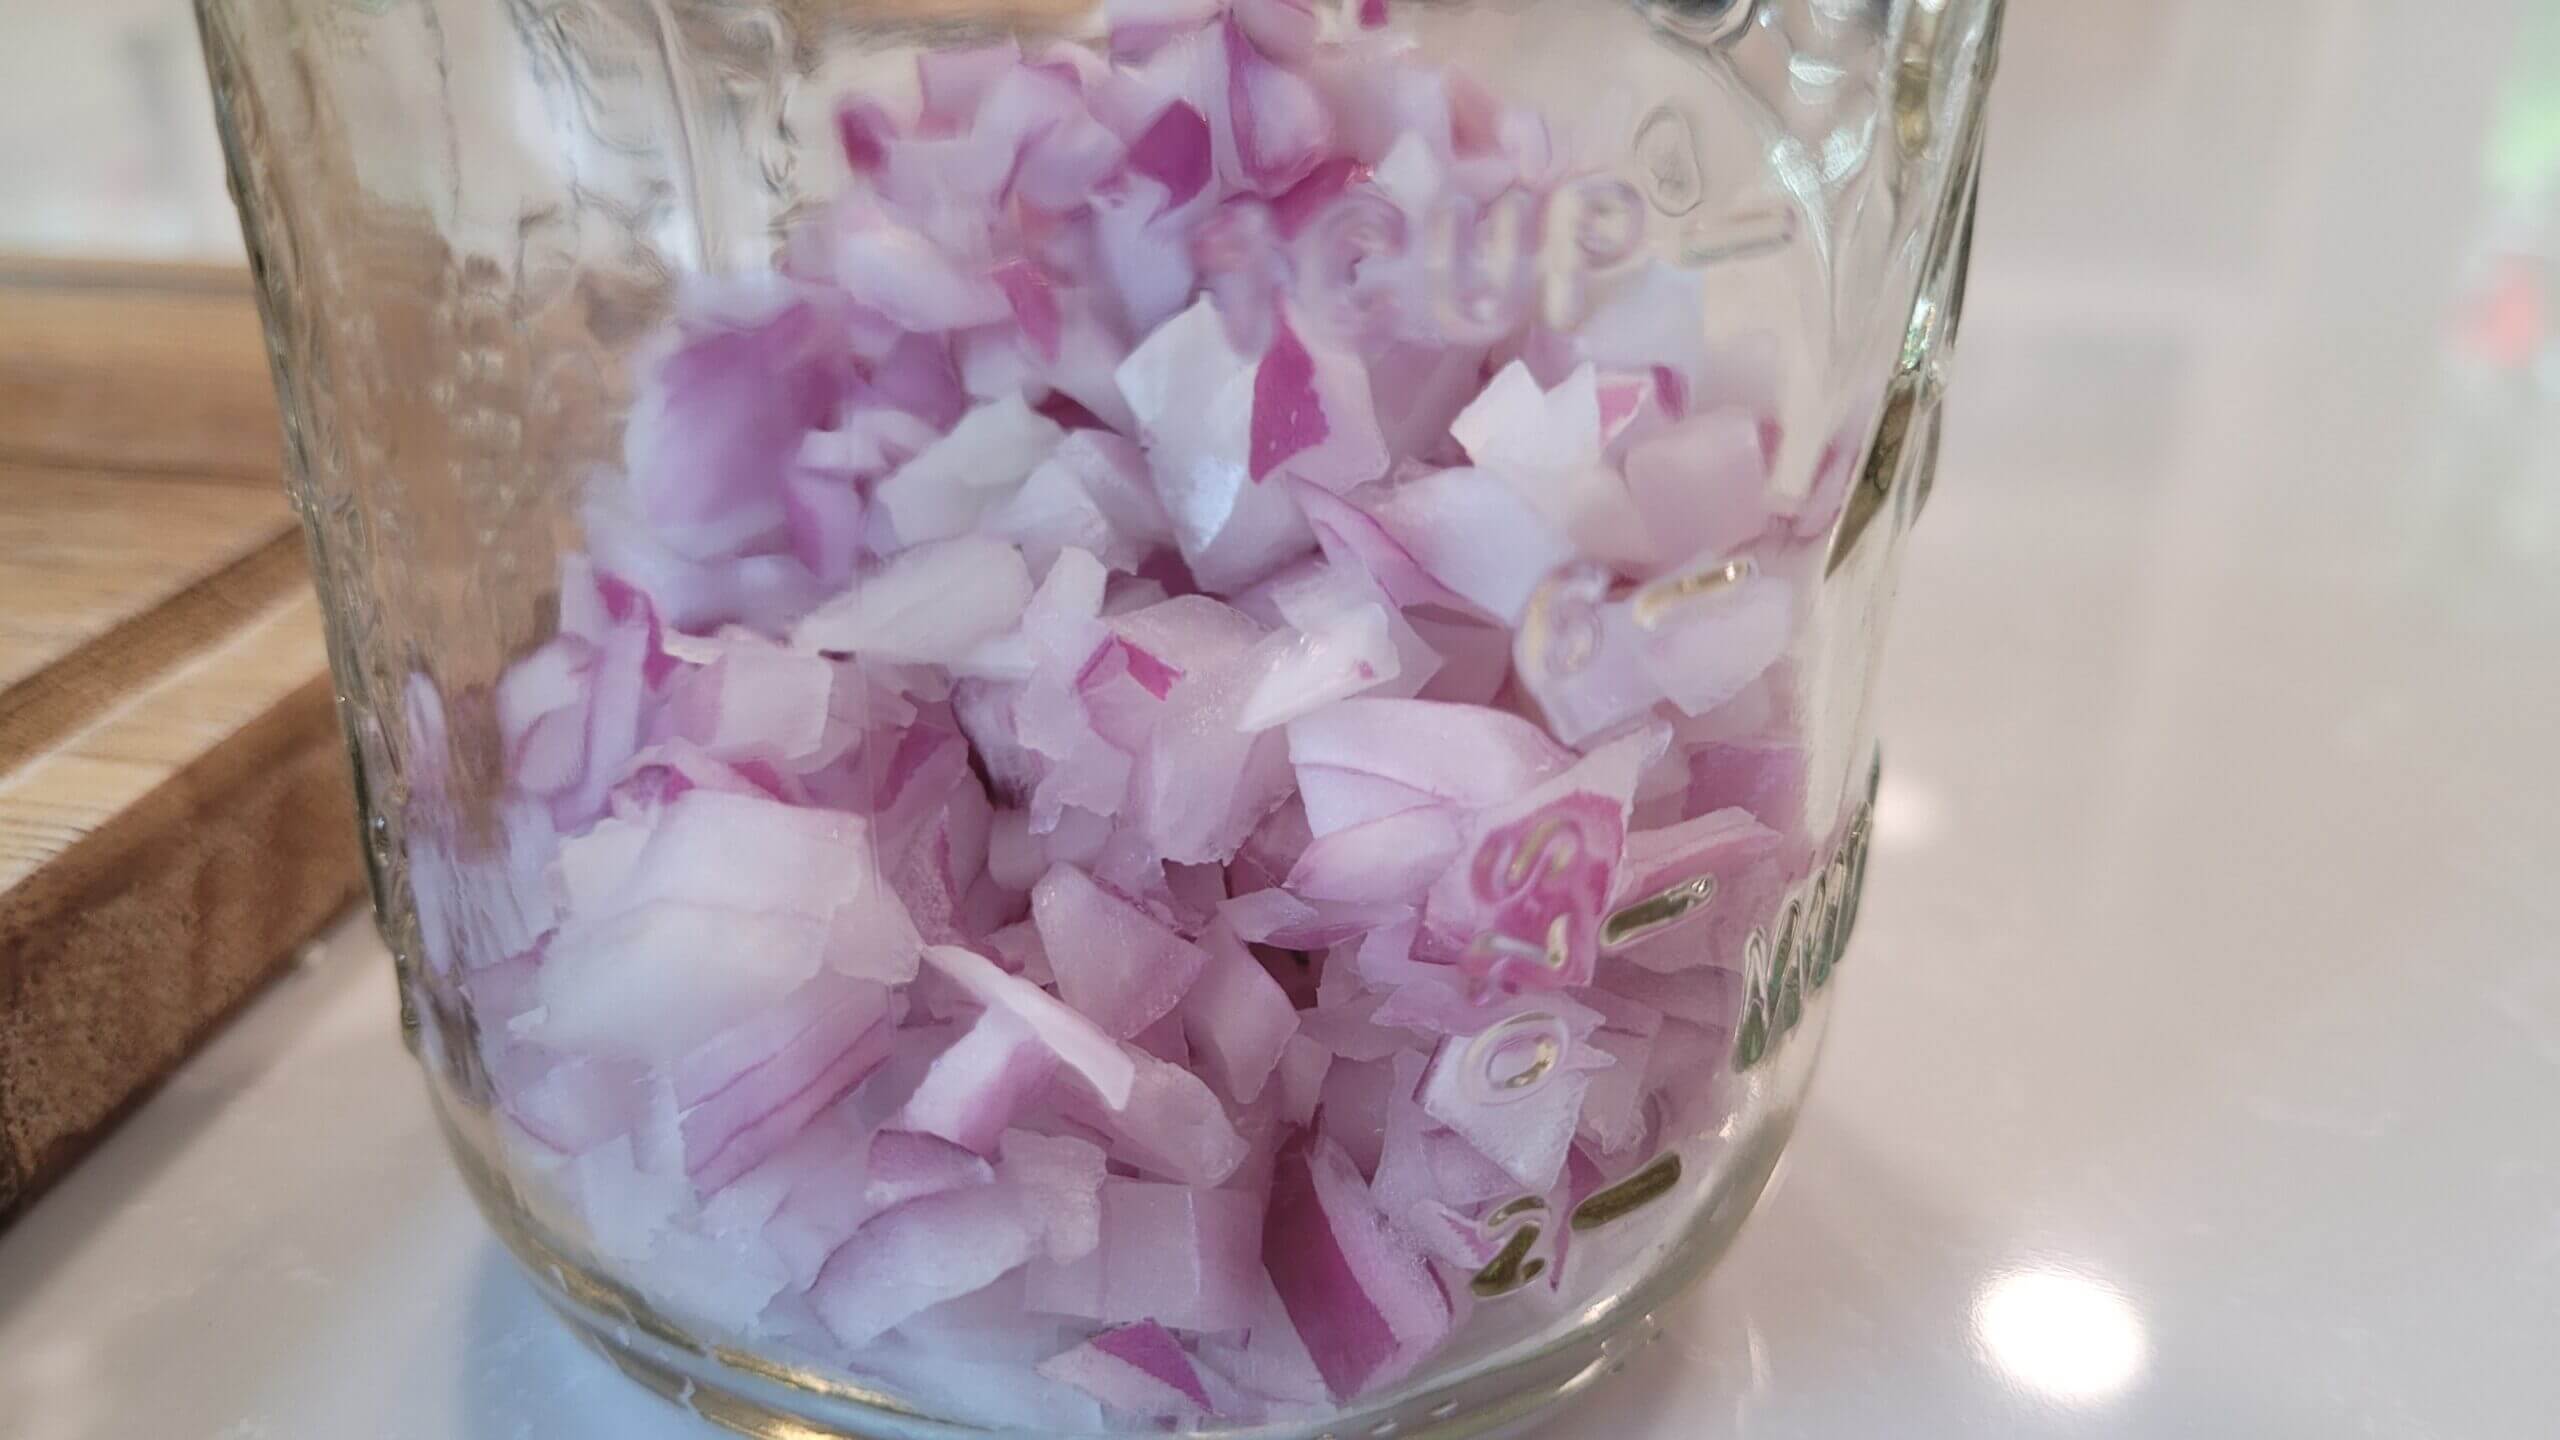 chopped onions in a glass jar 